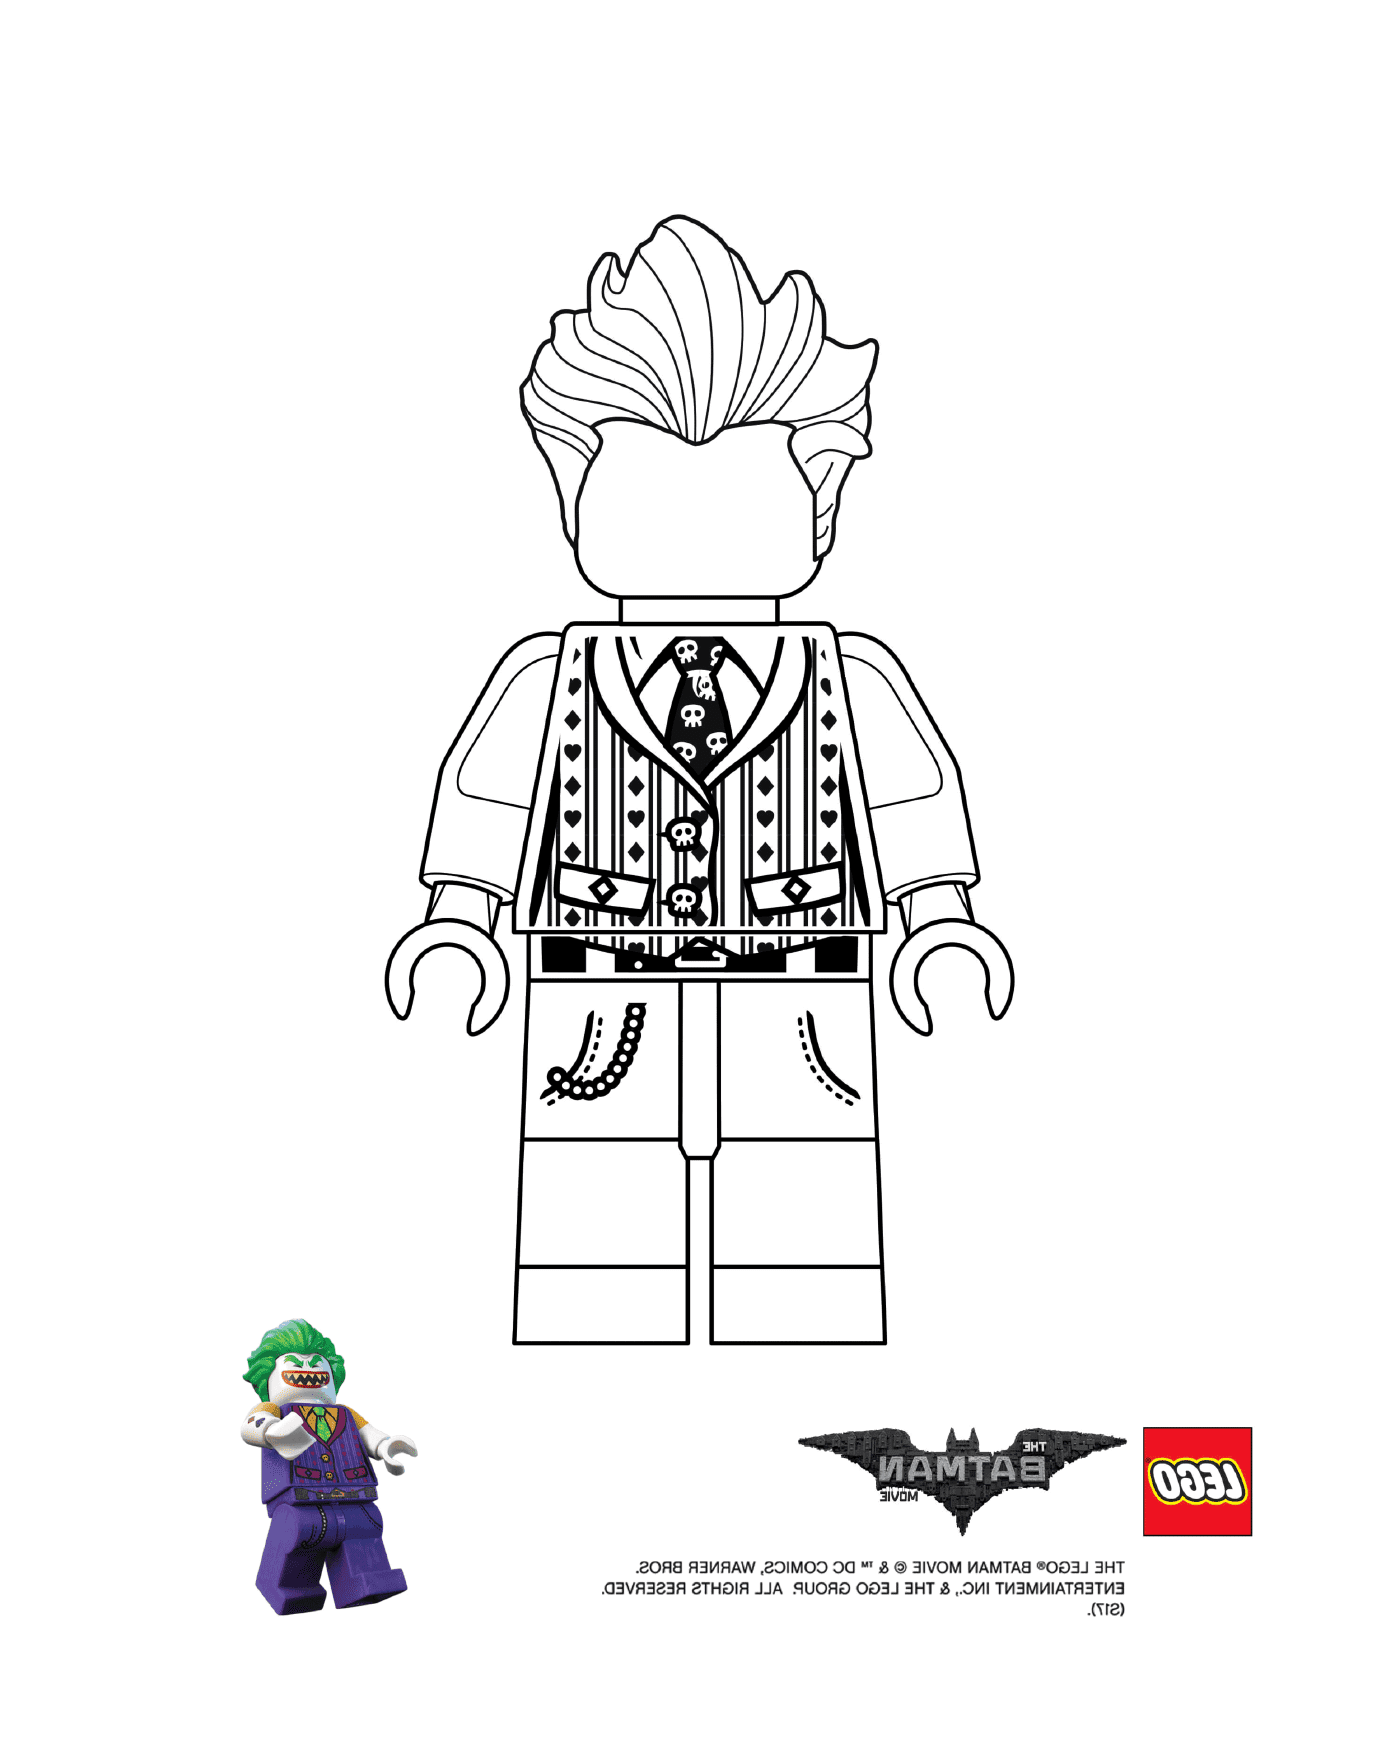  Joker Lego de la película Lego Batman 